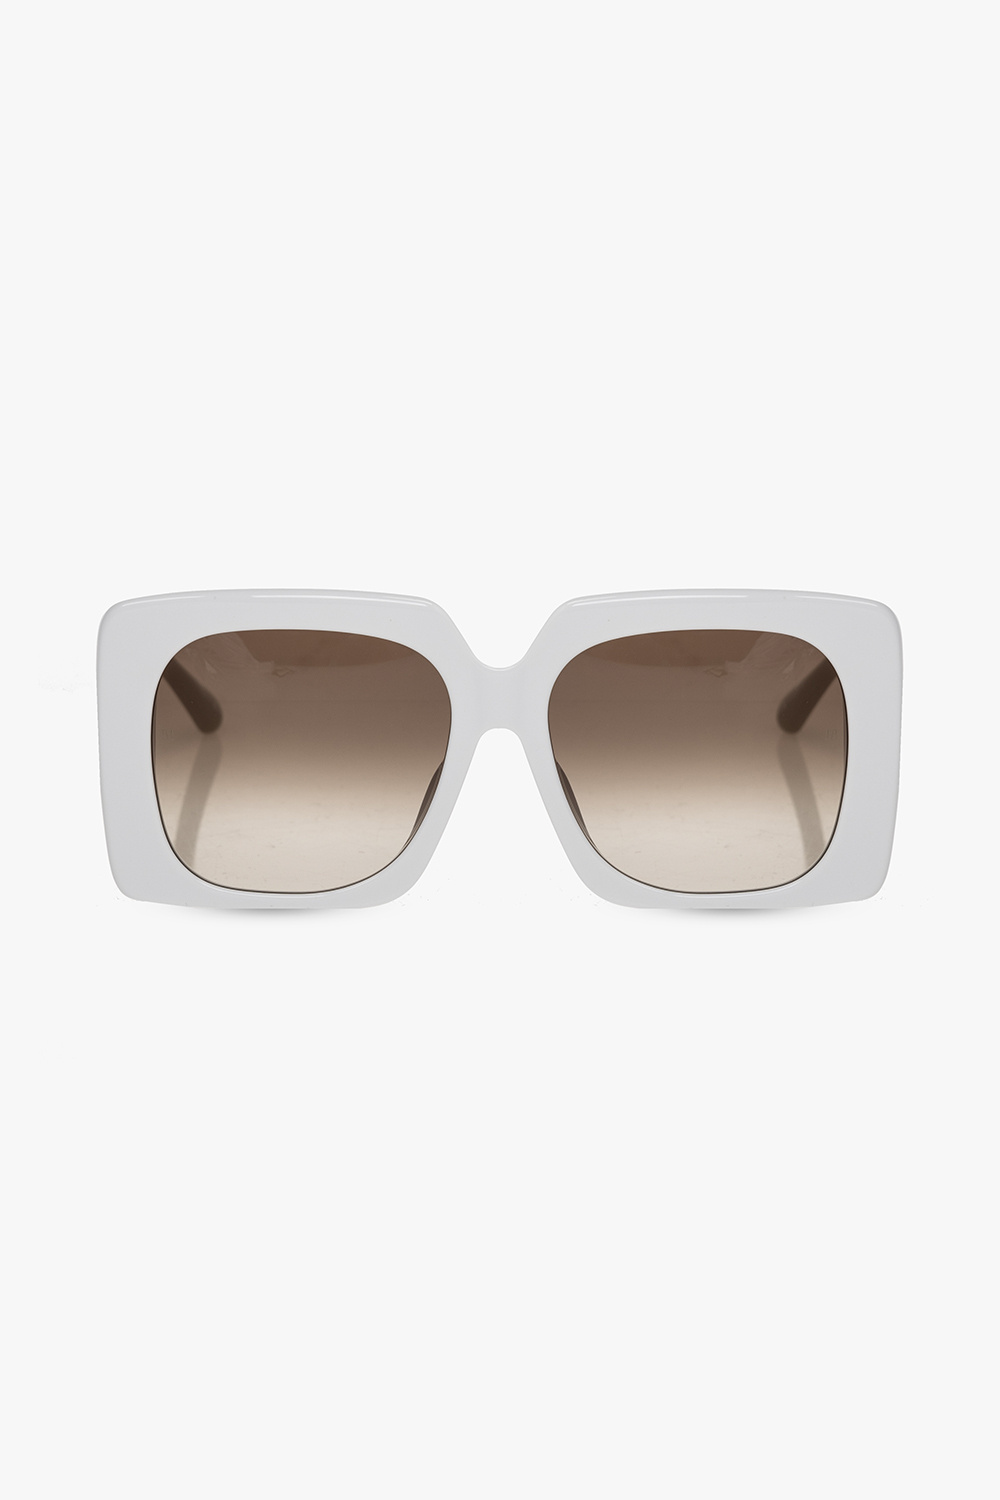 Linda Farrow ‘Sierra’ sunglasses